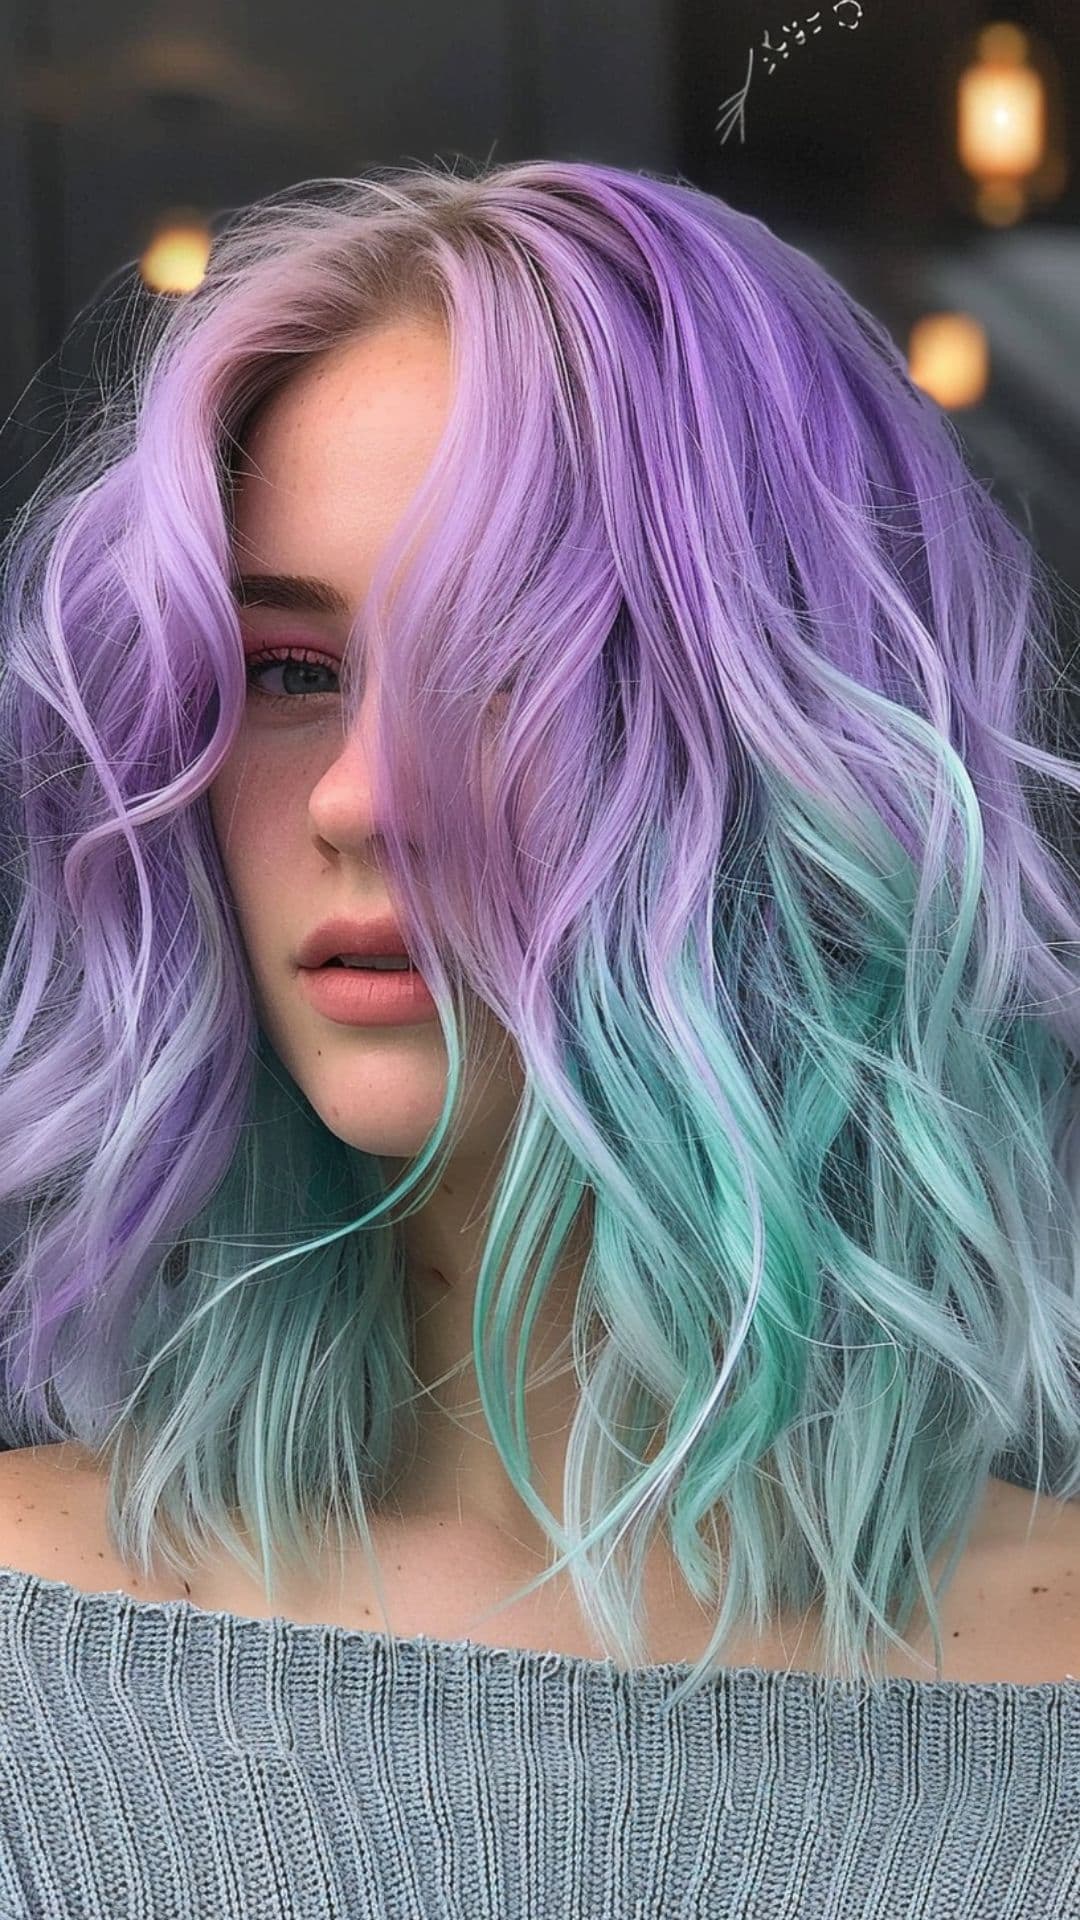 A woman modelling a lavender and aquamarine hair.